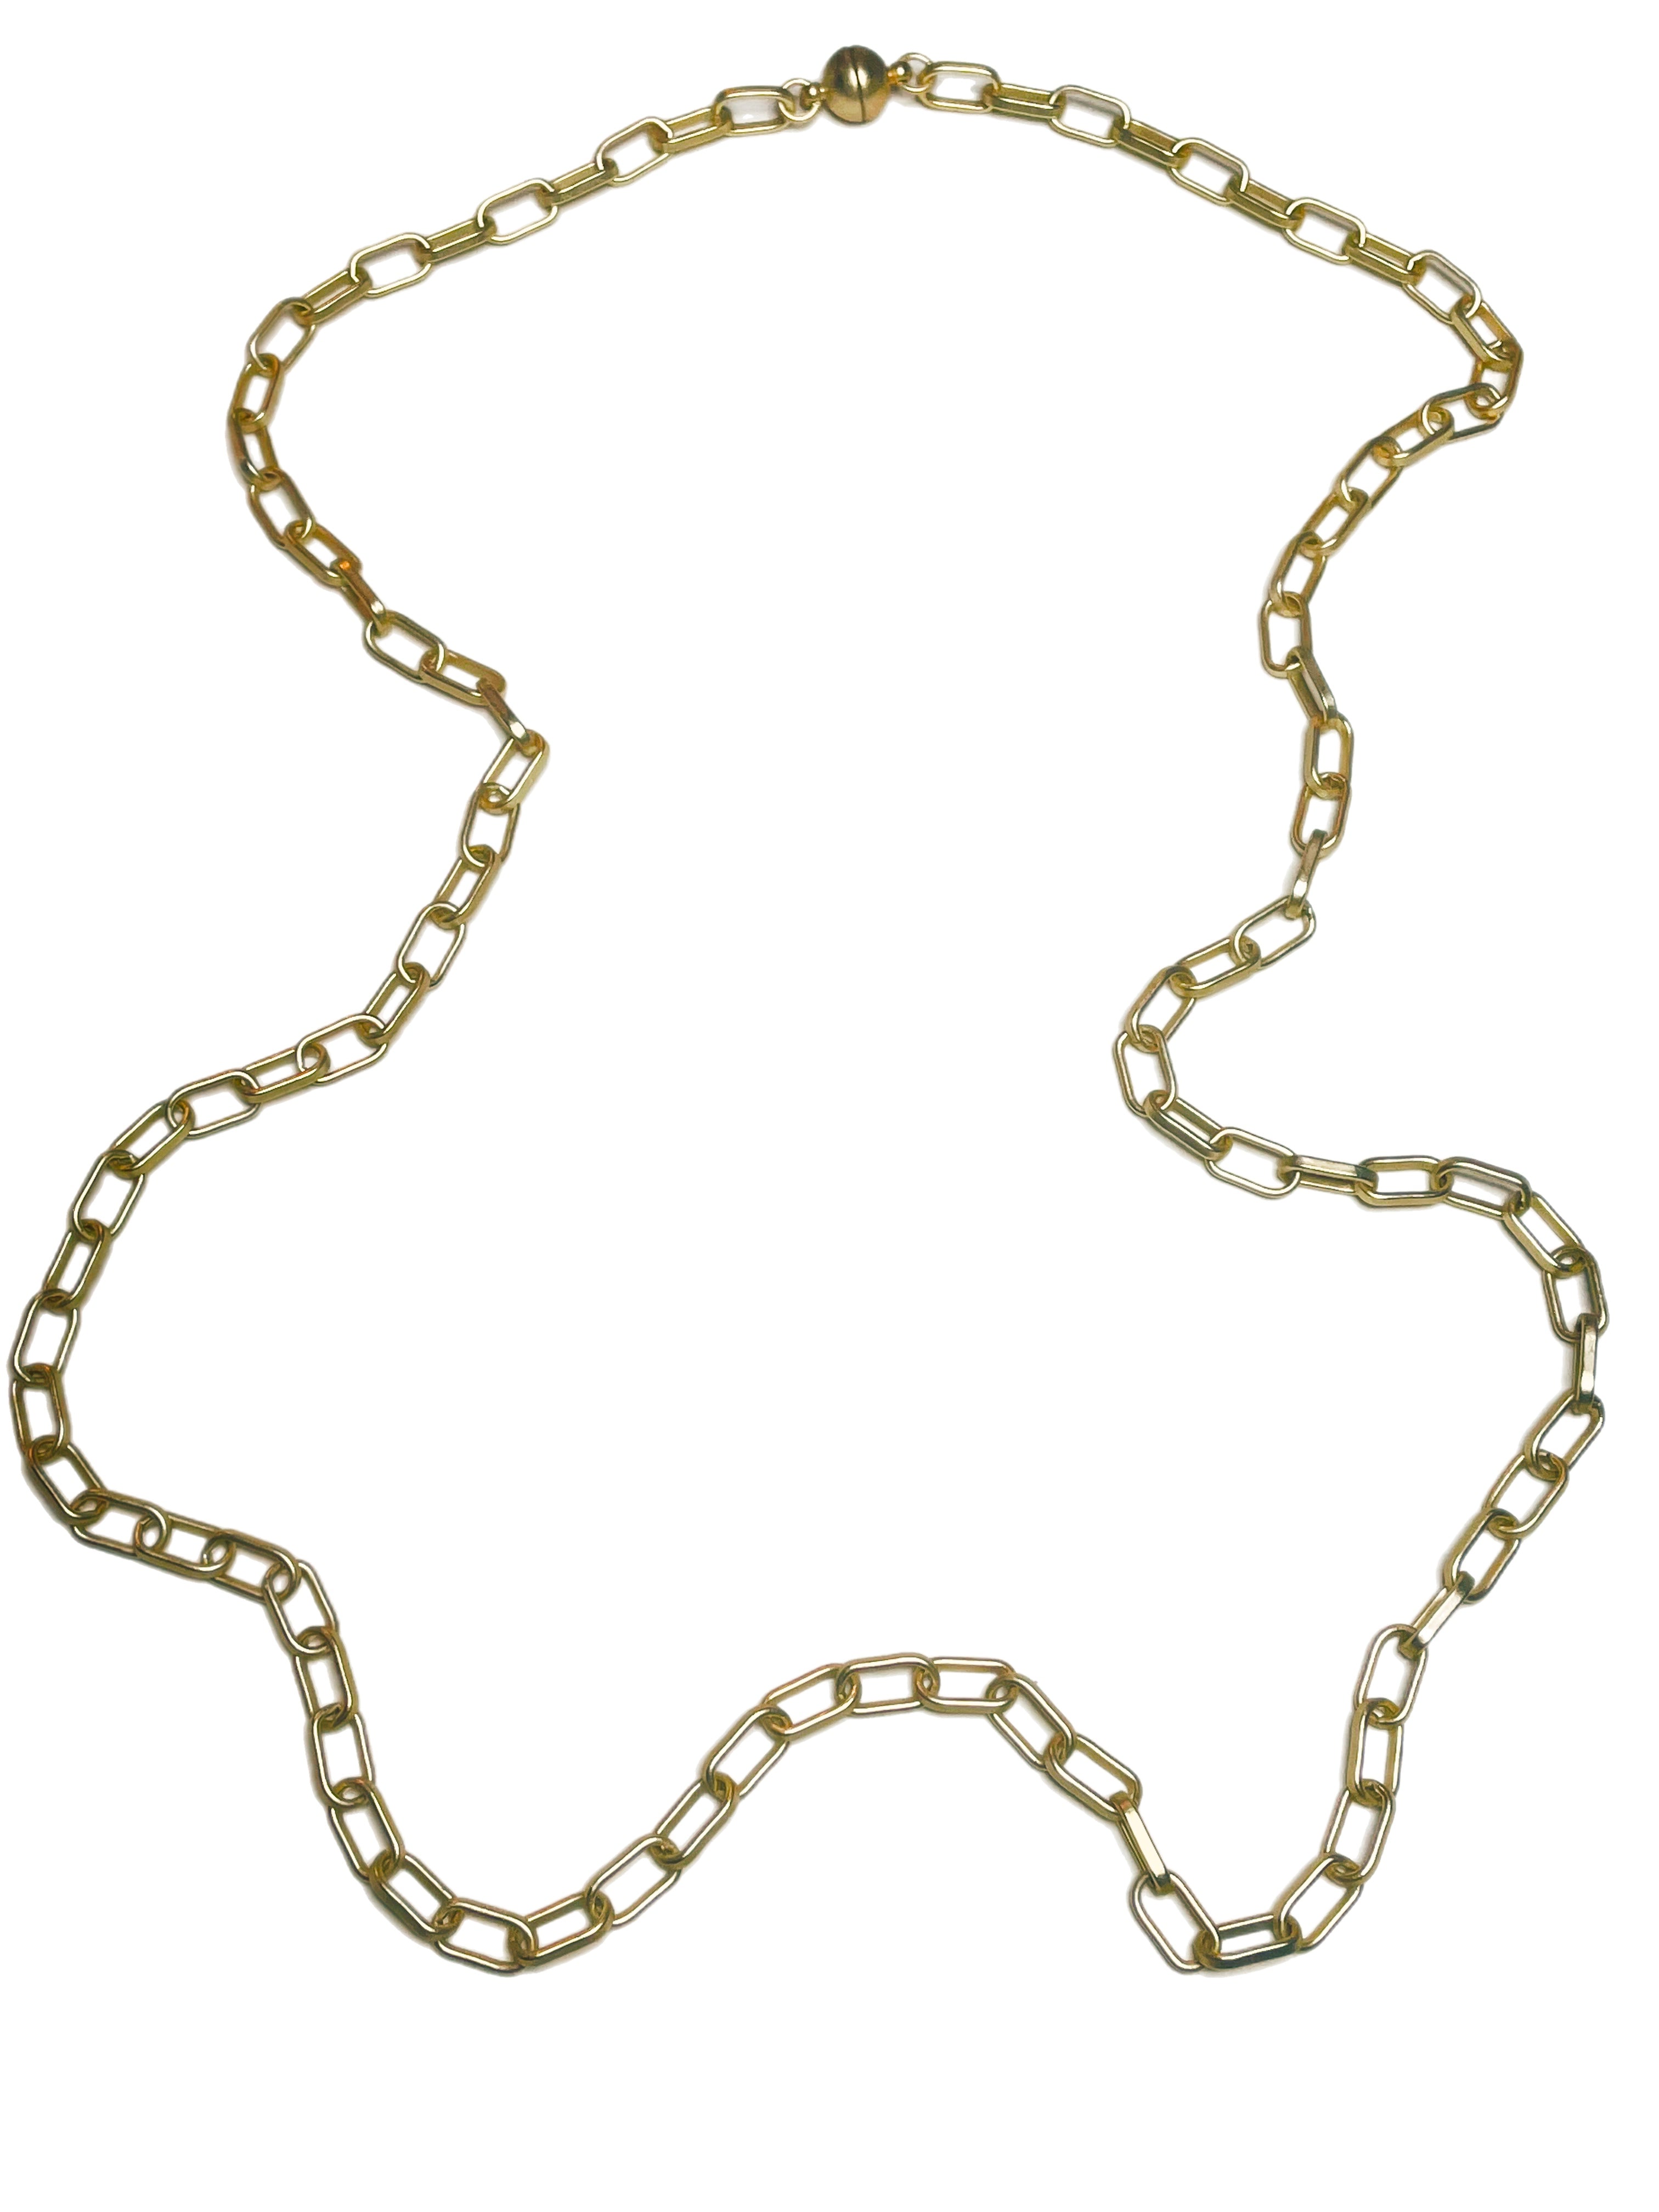 Trip Necklace/Bracelet